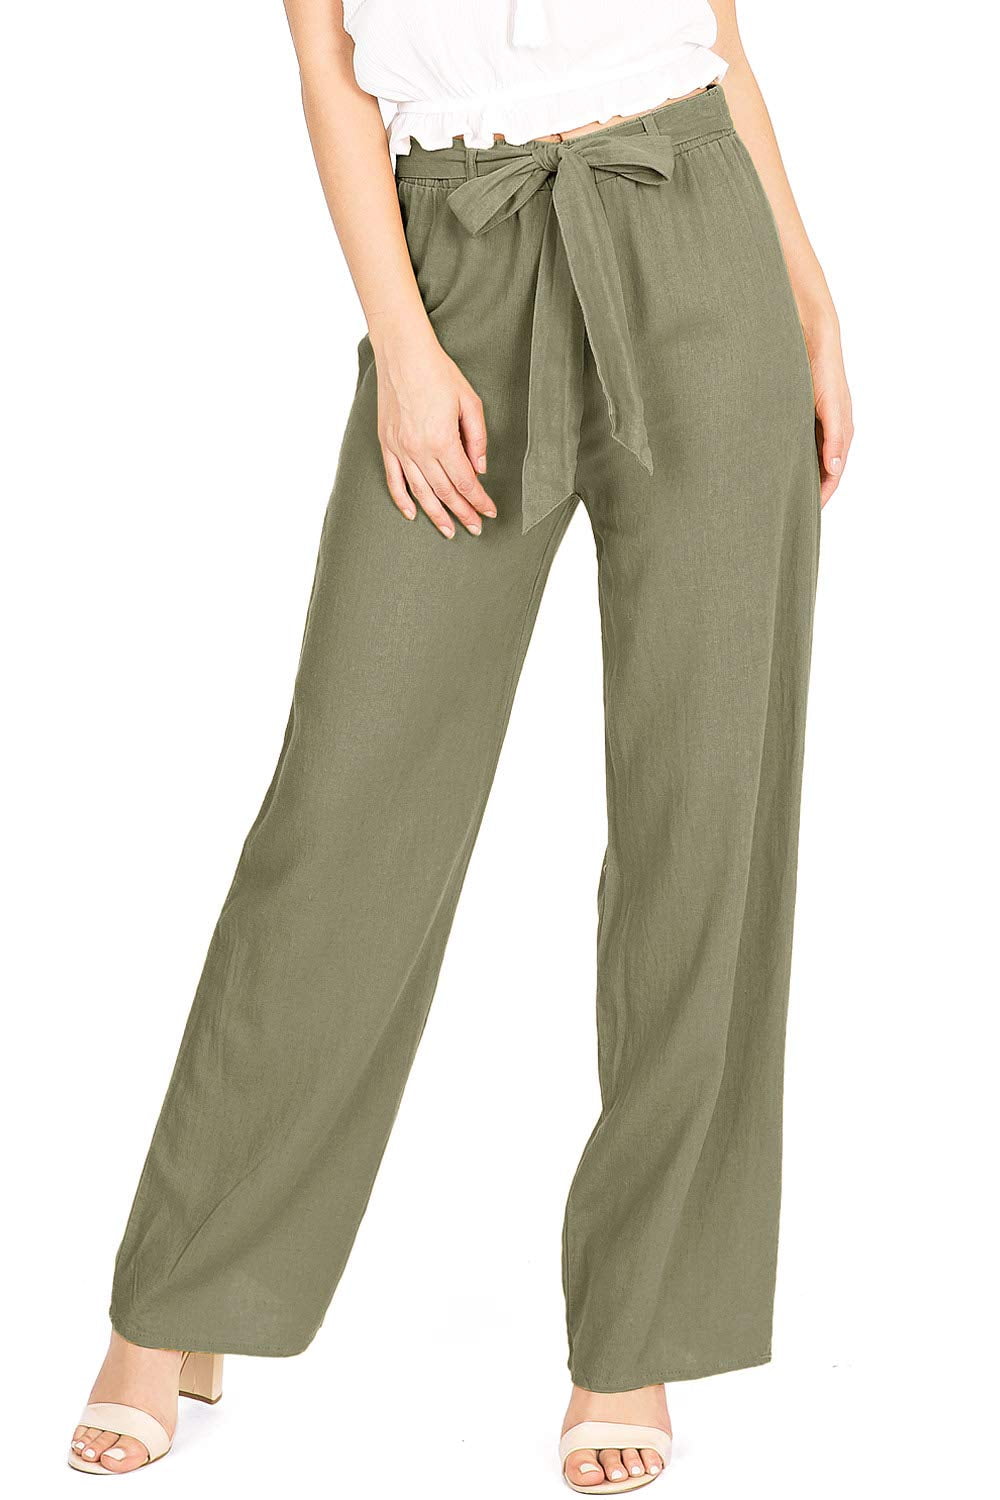 Ambiance Women's Juniors Wide Leg Spring Linen Pants (Olive, Medium) 